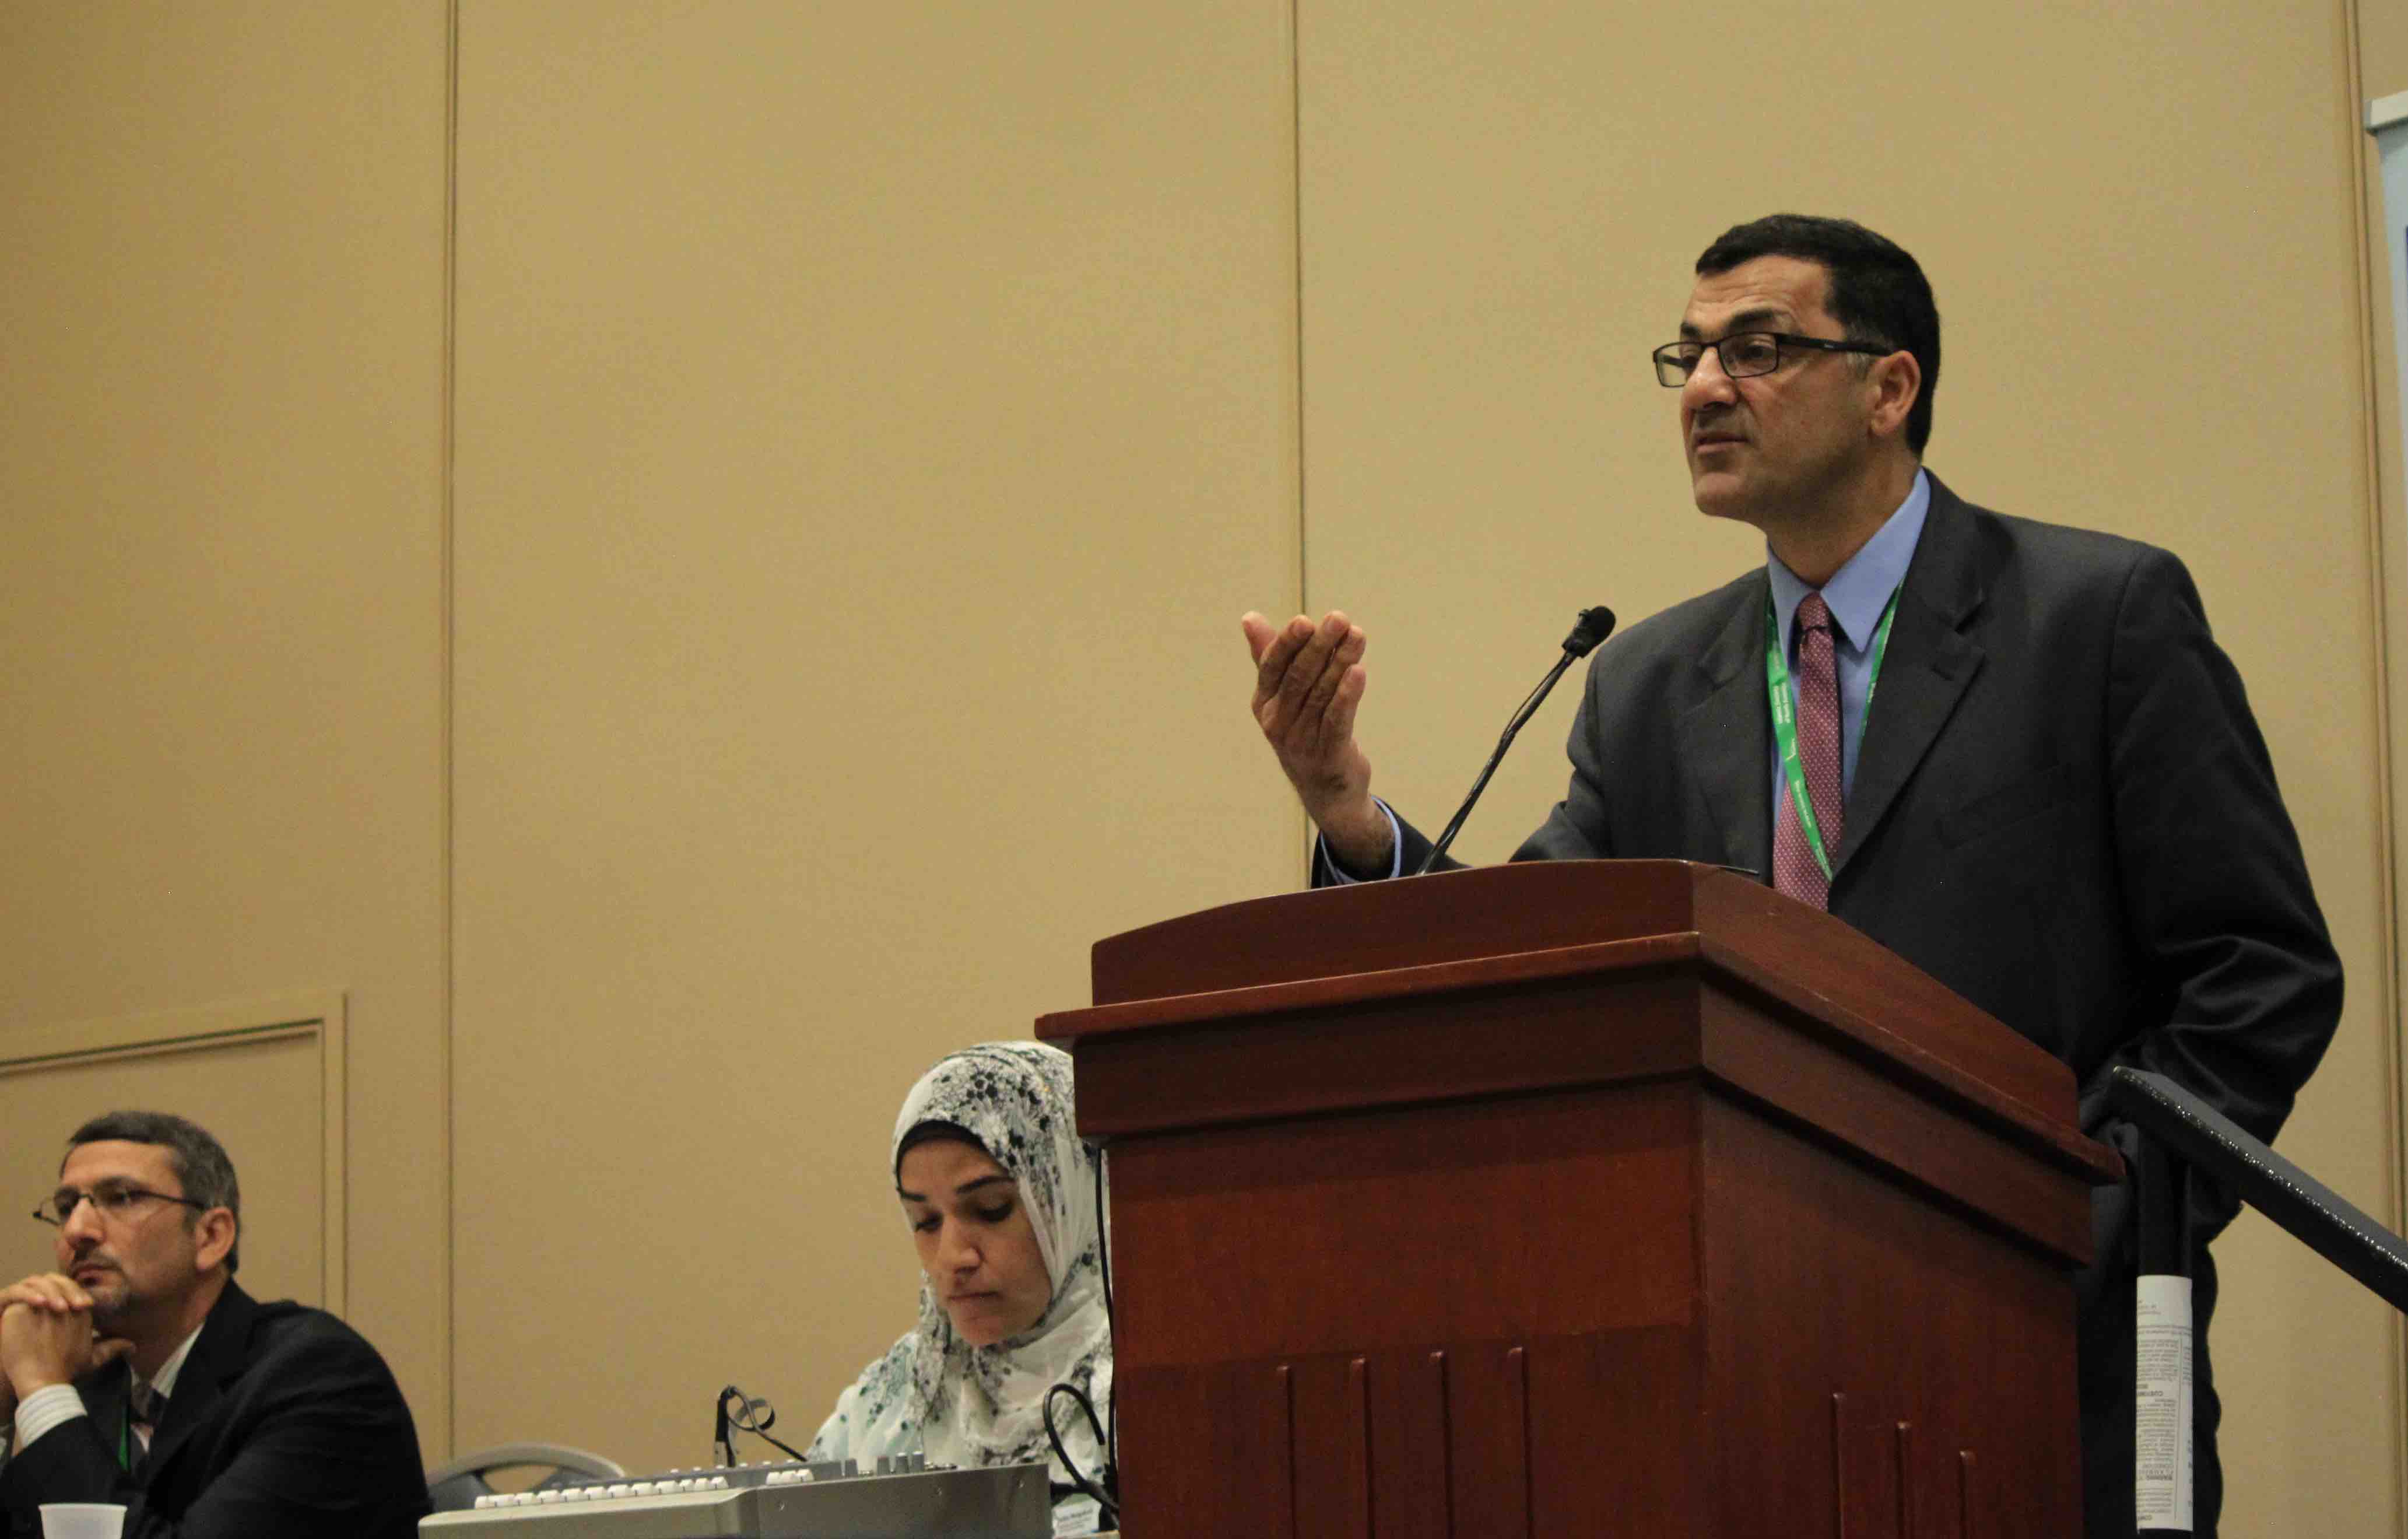 Debate participant Salam Al-Marayati at the podium explaining his perspective